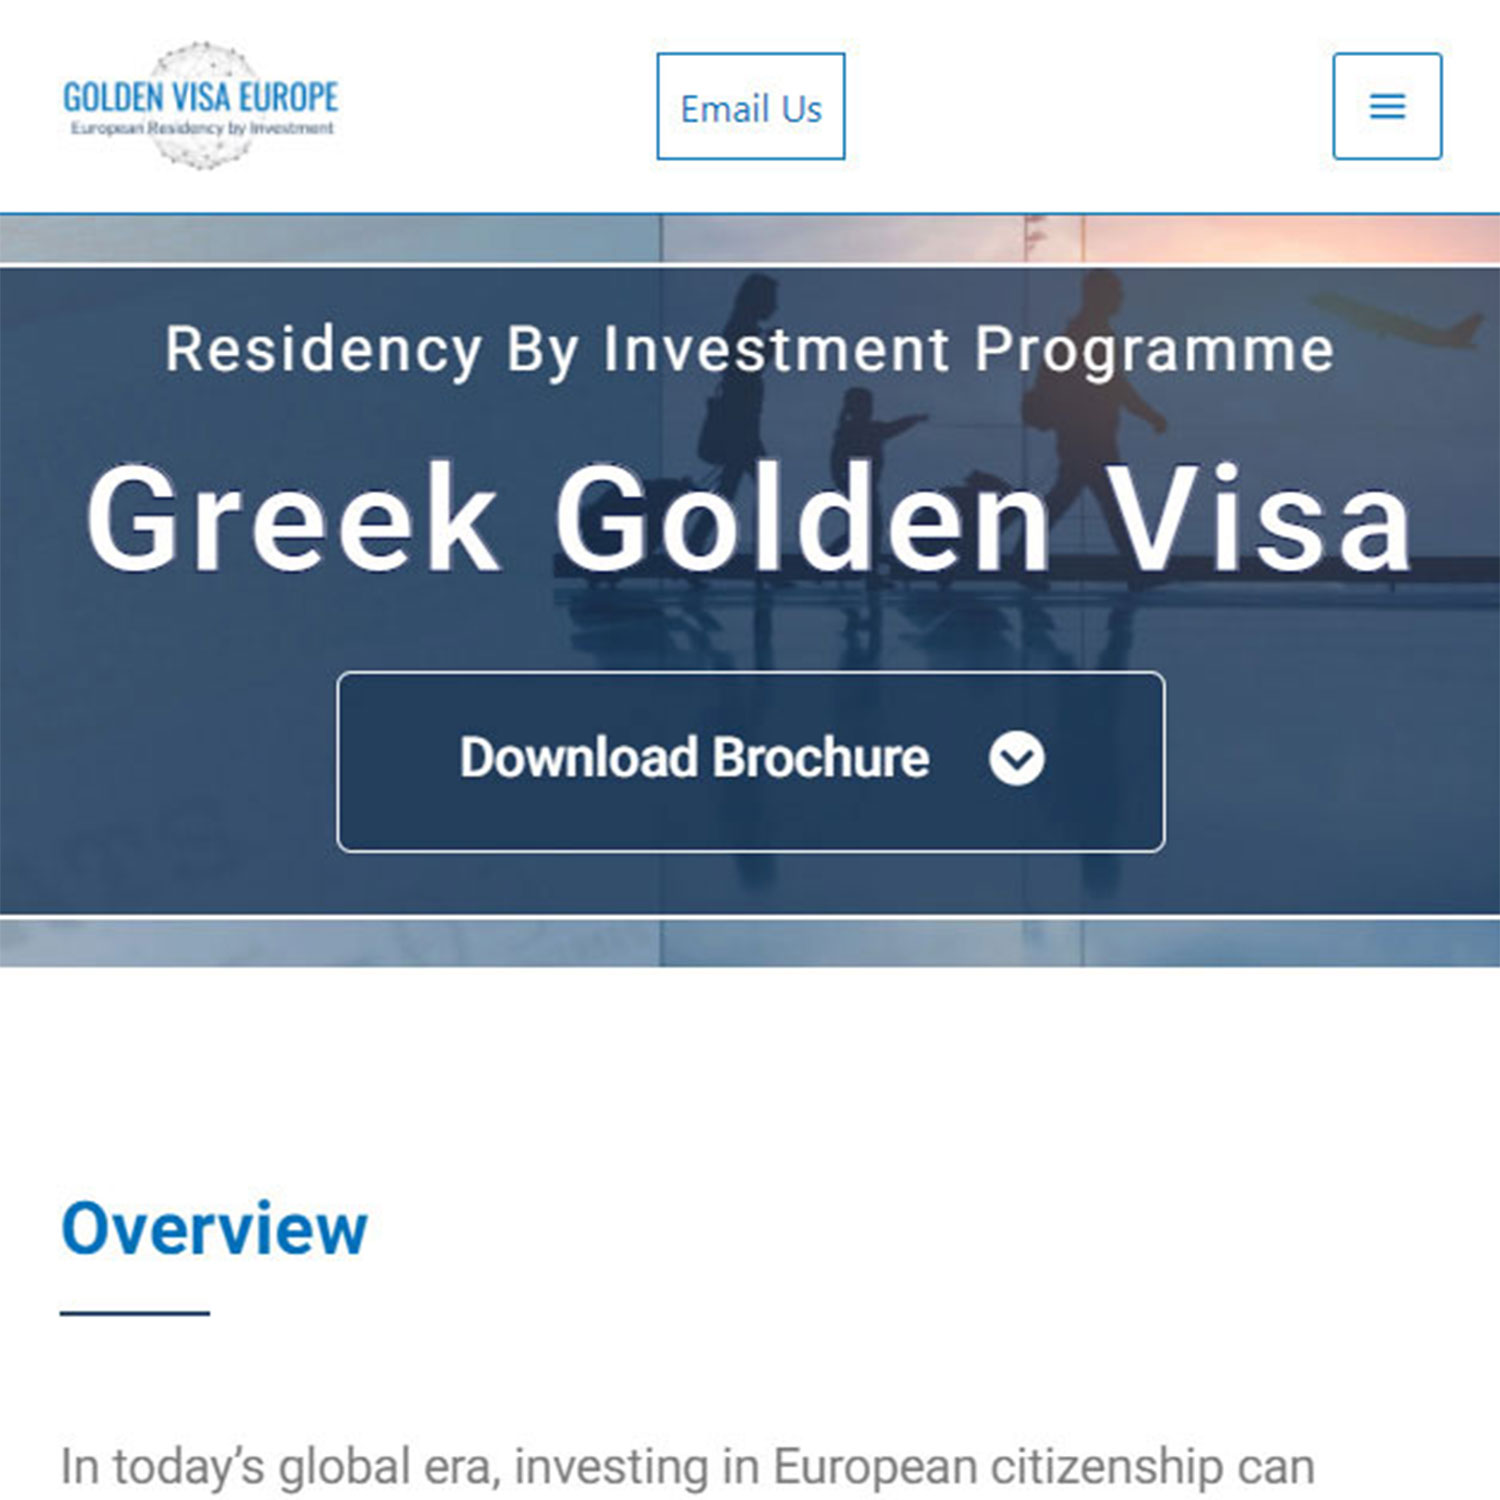 Golden-Visa-Europe